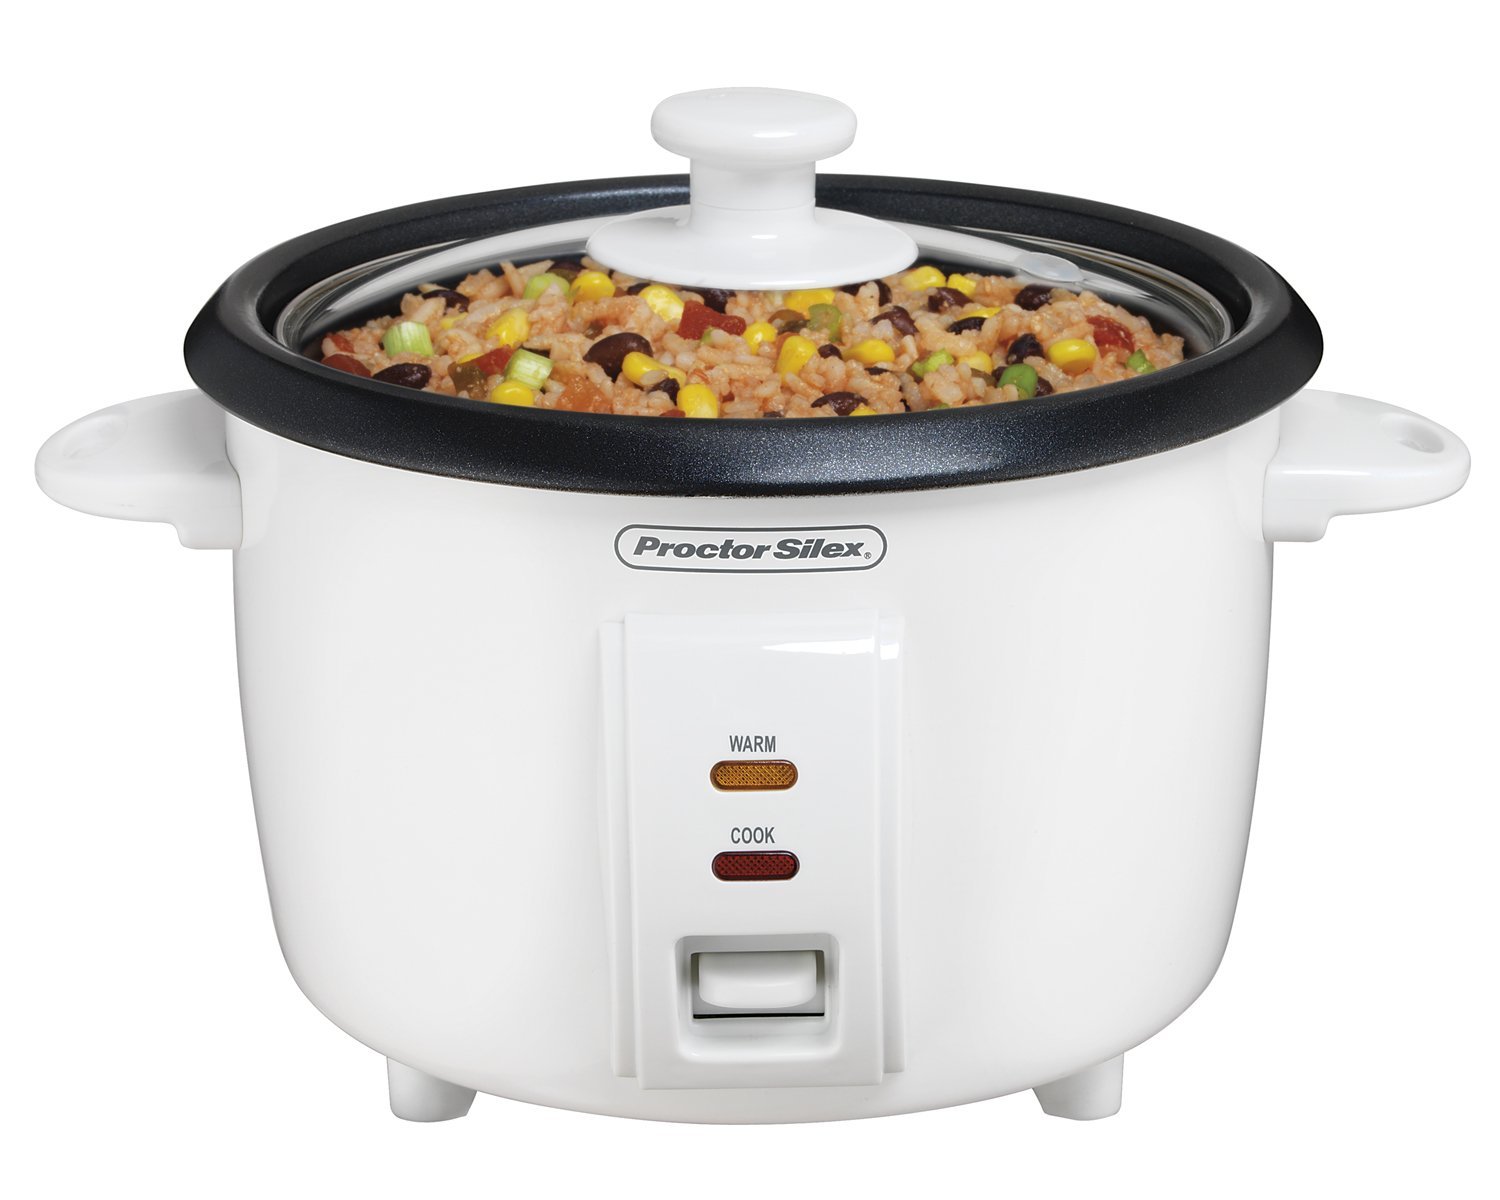 https://www.dontwasteyourmoney.com/wp-content/uploads/2019/08/proctor-silex-rice-cooker-rice-cooker.jpg